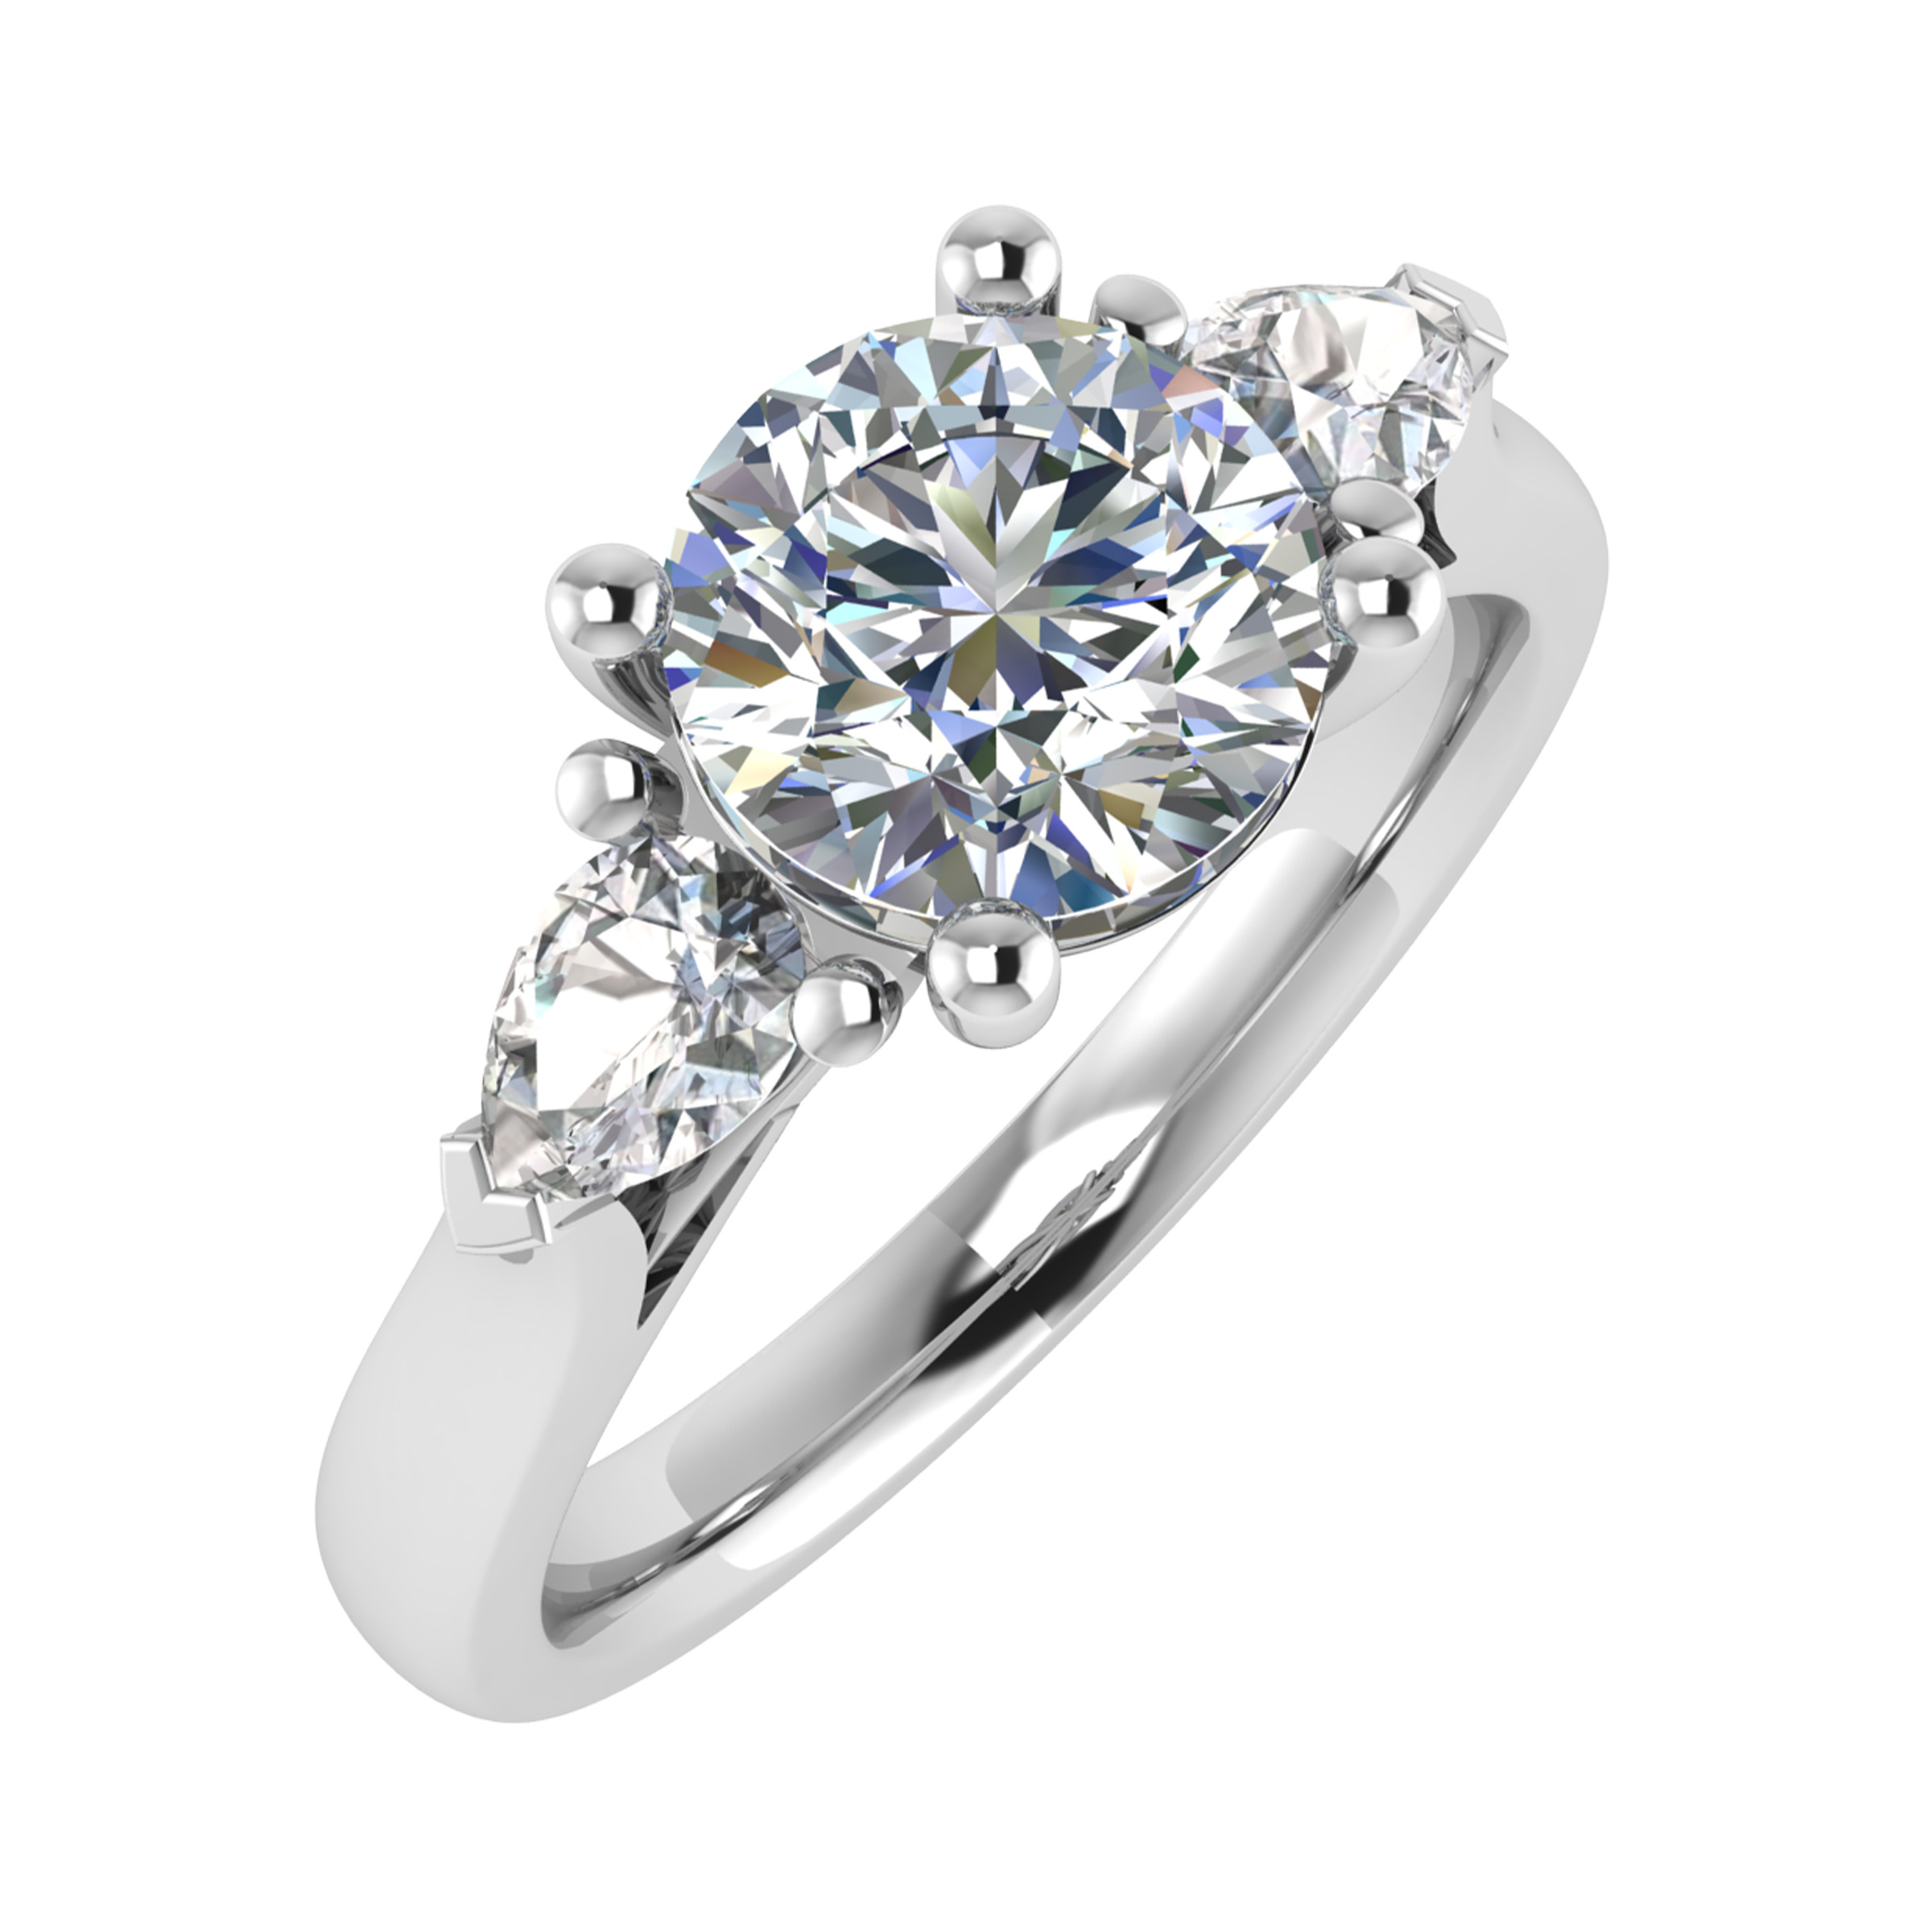 0.20 - 2.00 Carat Natural Diamond Trilogy Engagement Rings